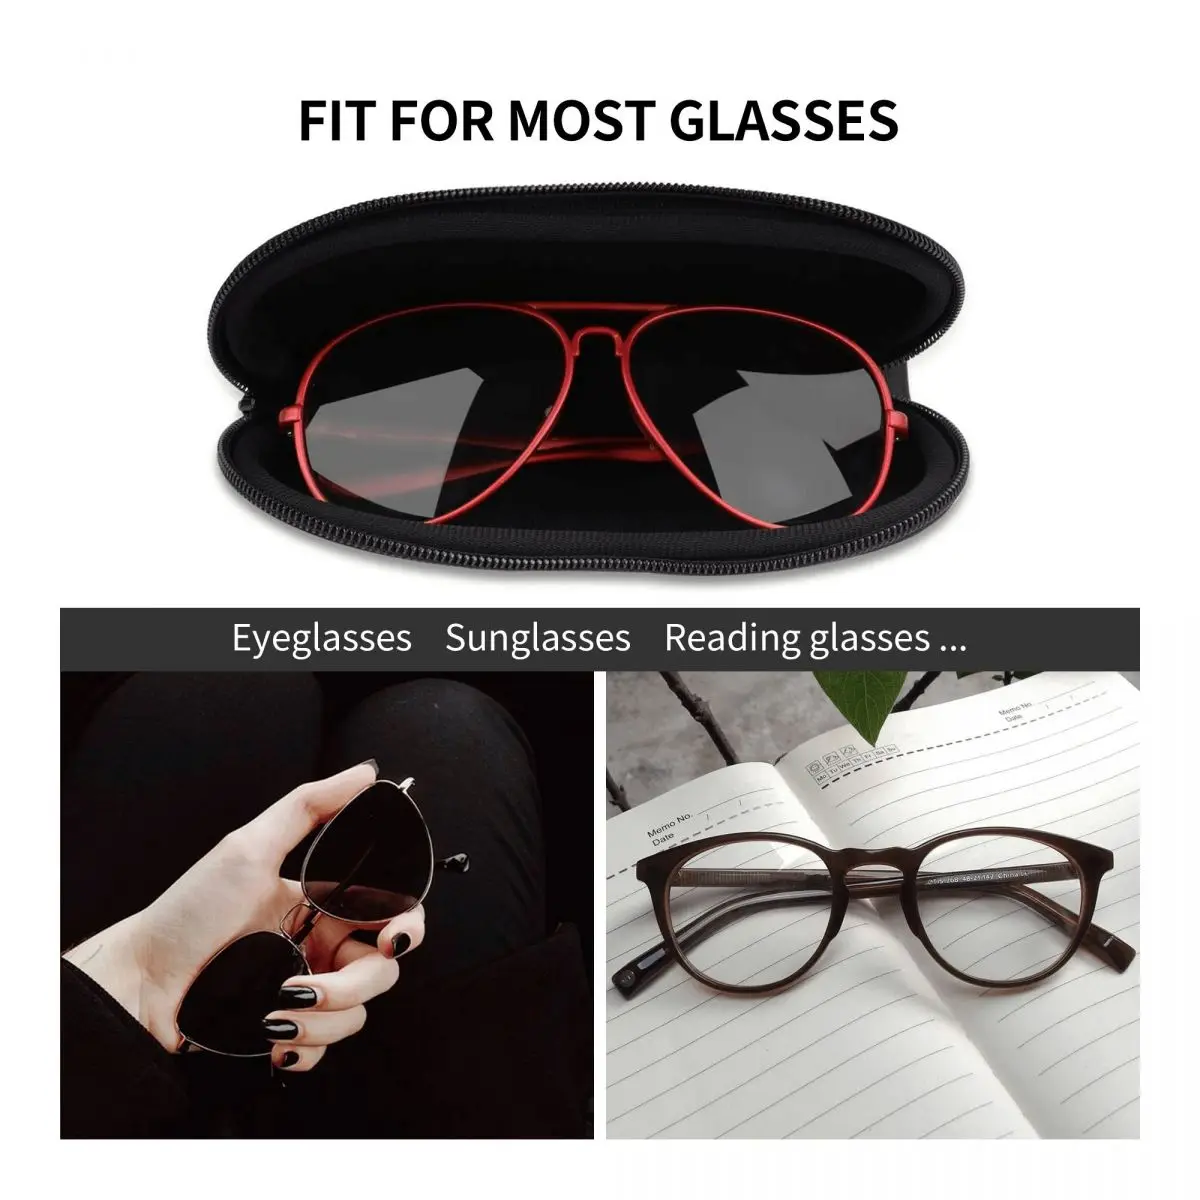 Urso De Óculos Caso Dos Desenhos Animados Guache Caso De Óculos De Sol Diárias De Moda De Óculos De Acessórios Personalizados Homens Mulheres Óculos De Caixa